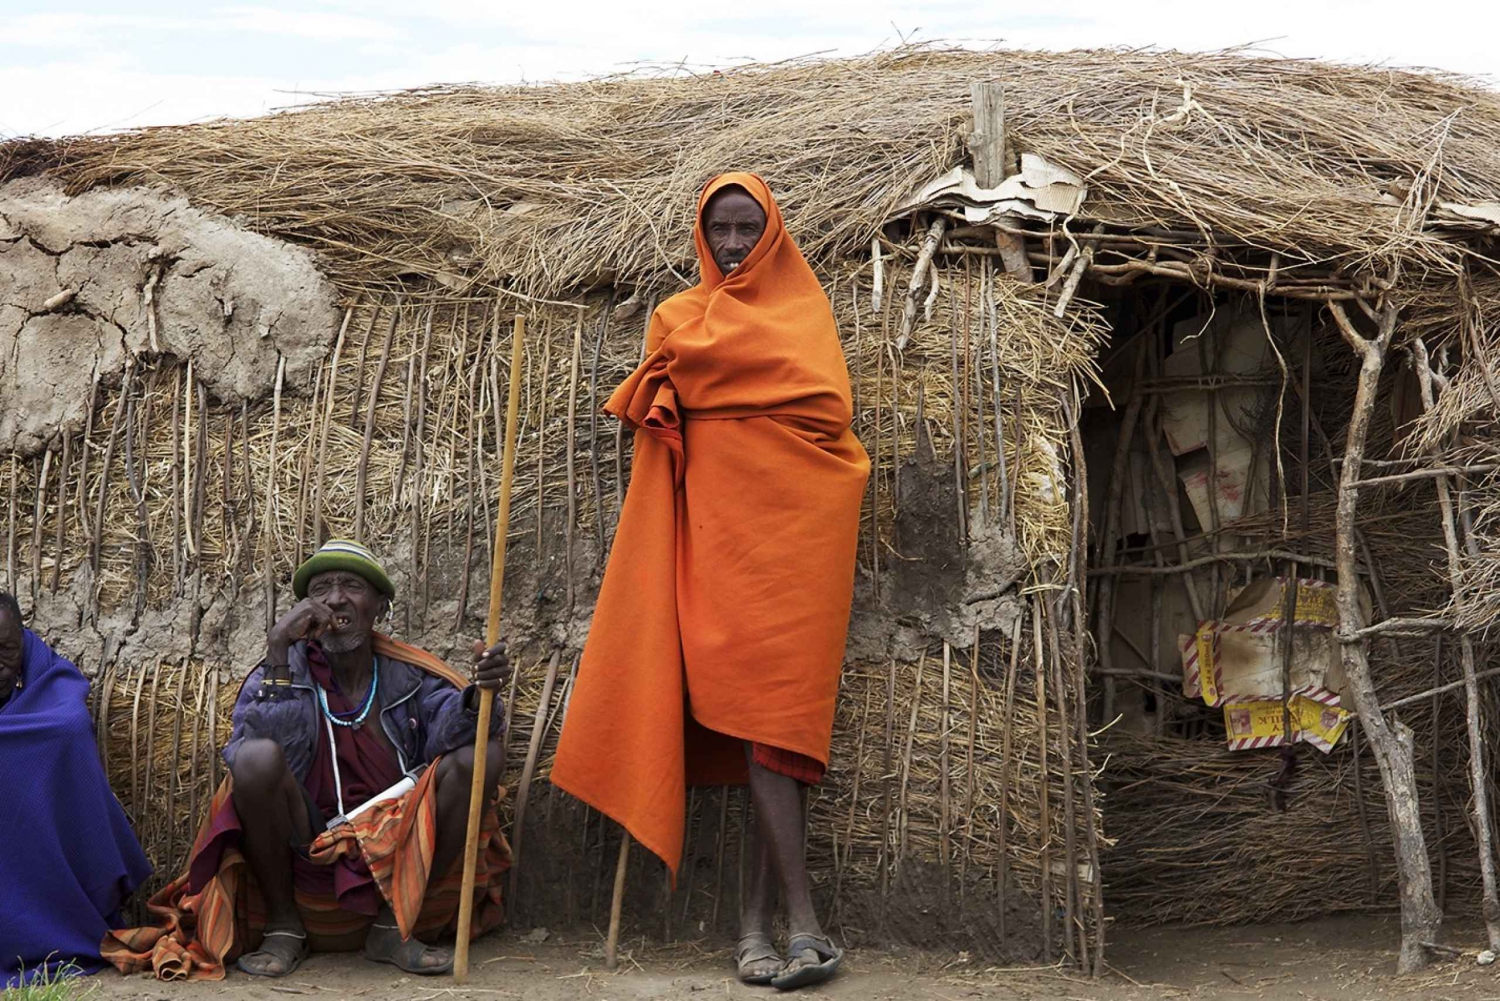 Cultural Masai Village Visit